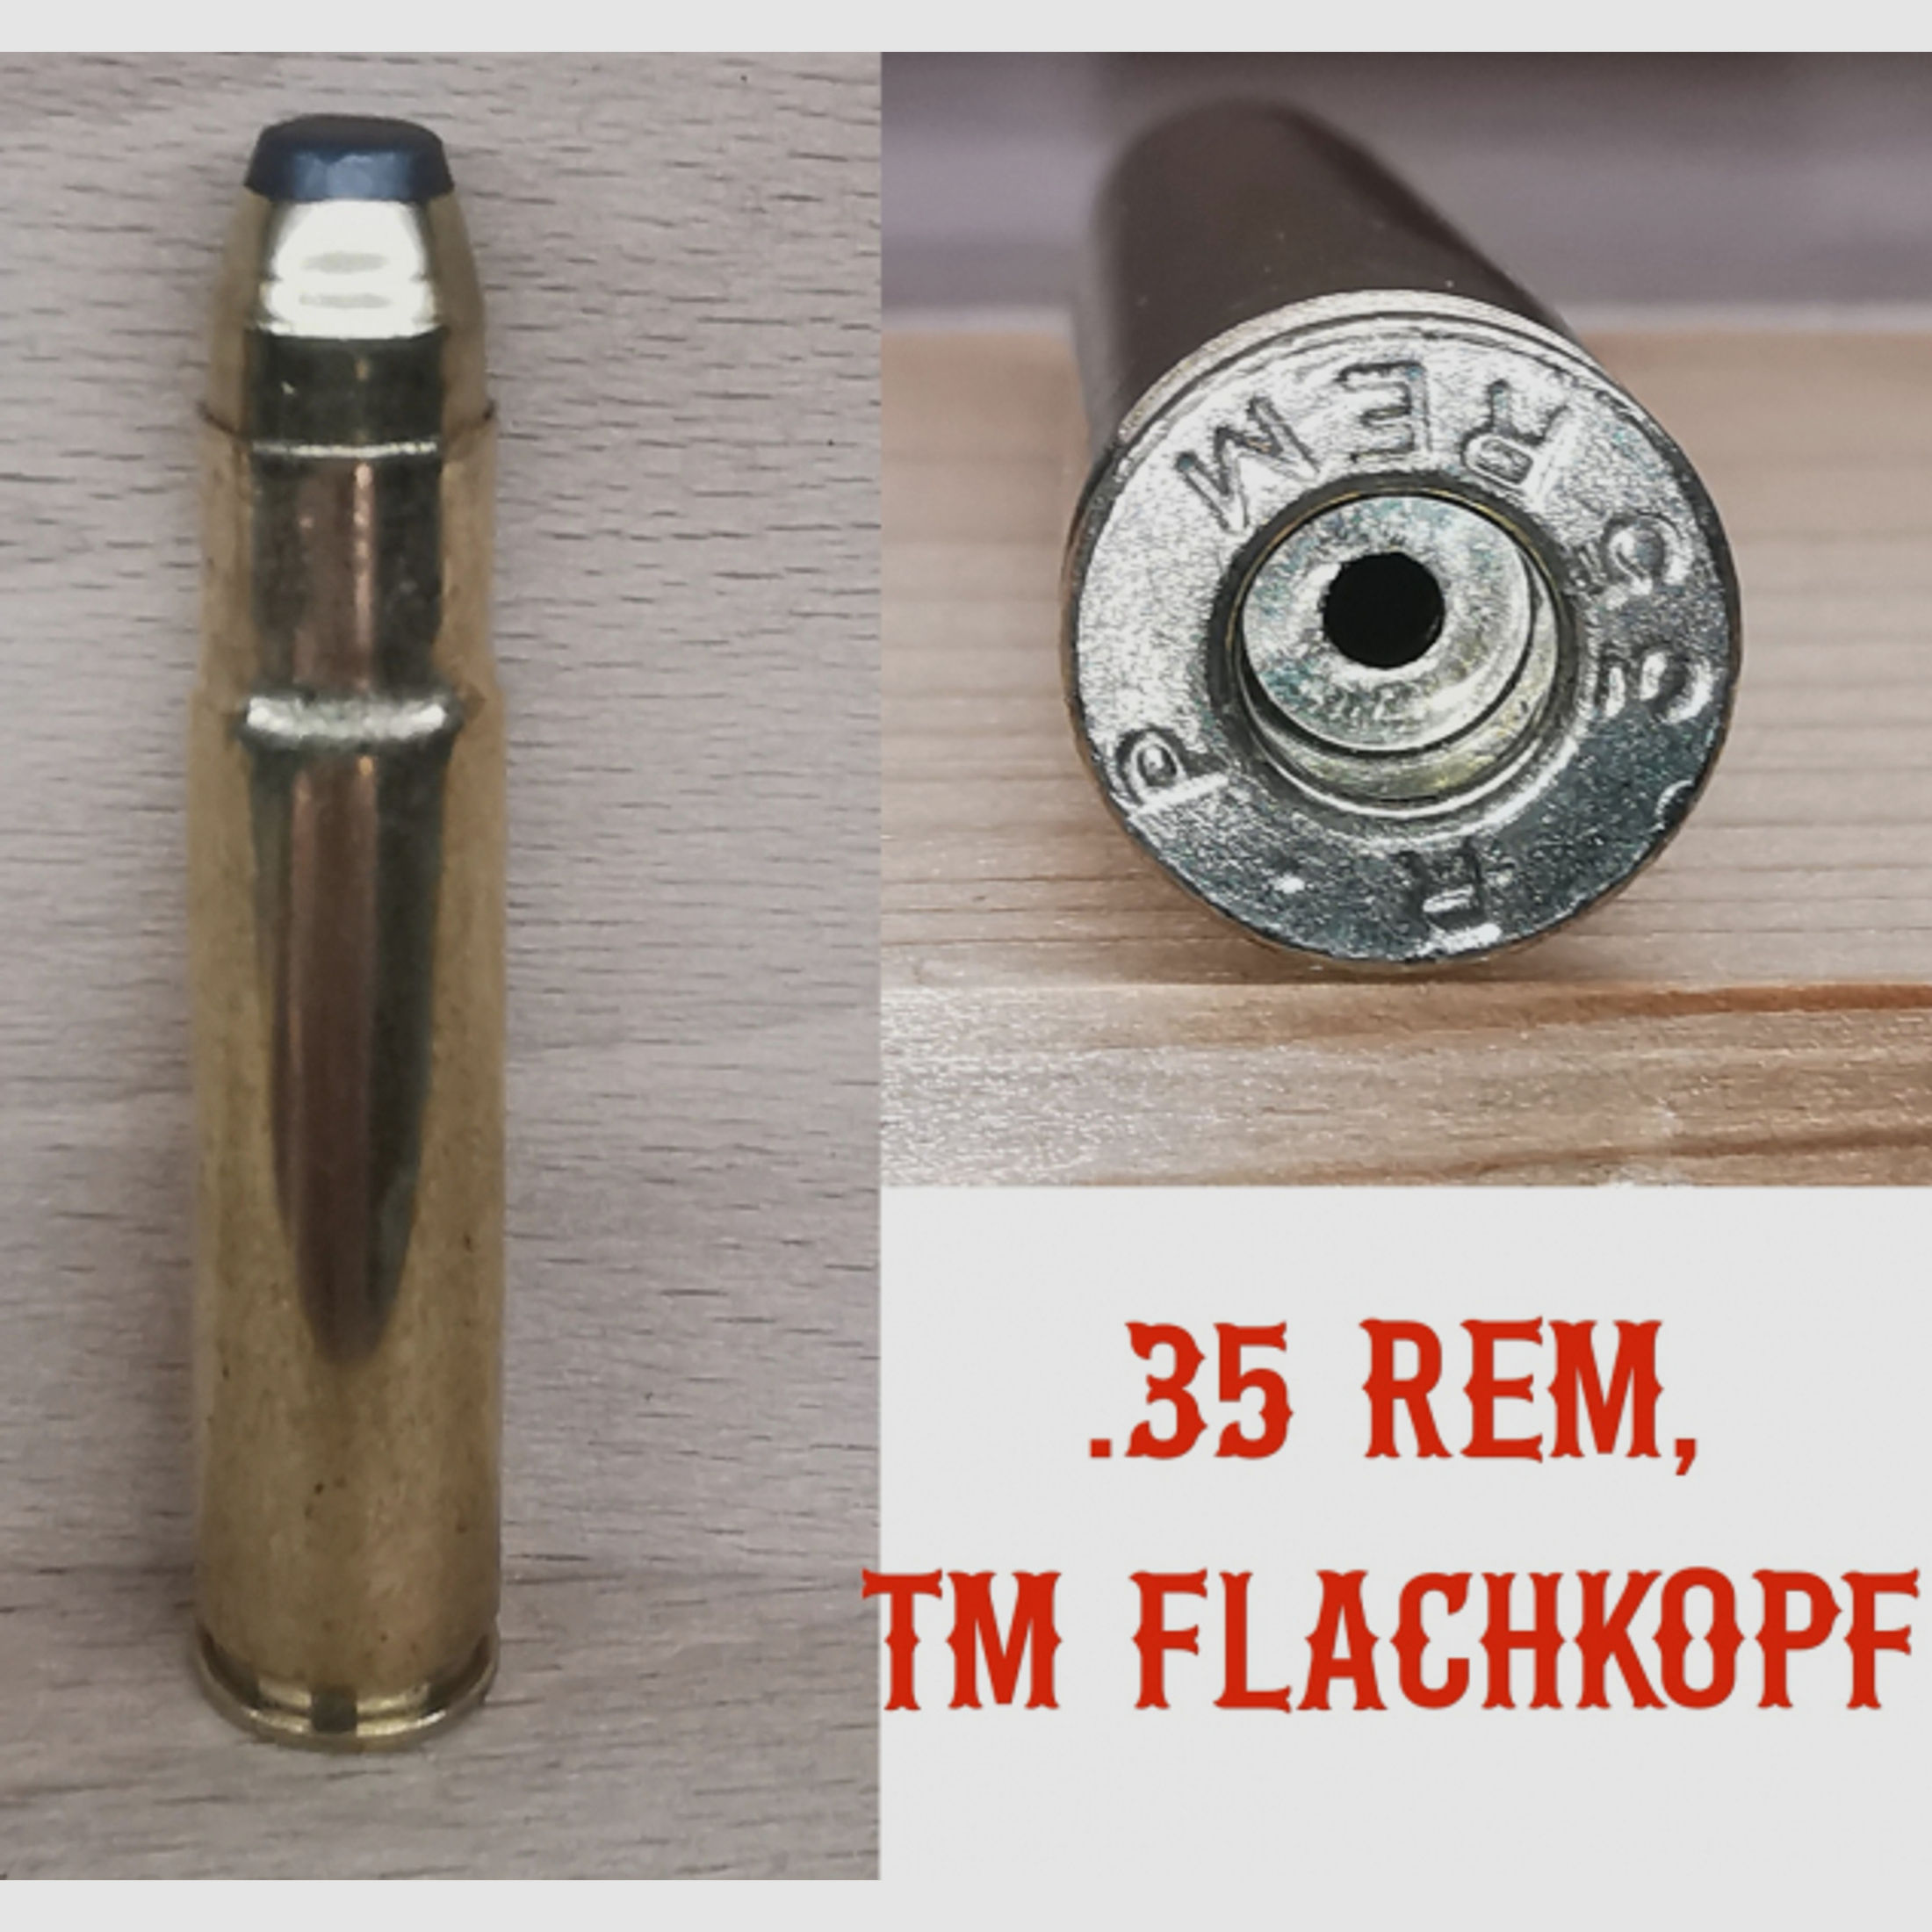 .35 REM, TM Flachkopf, Deko-Patrone